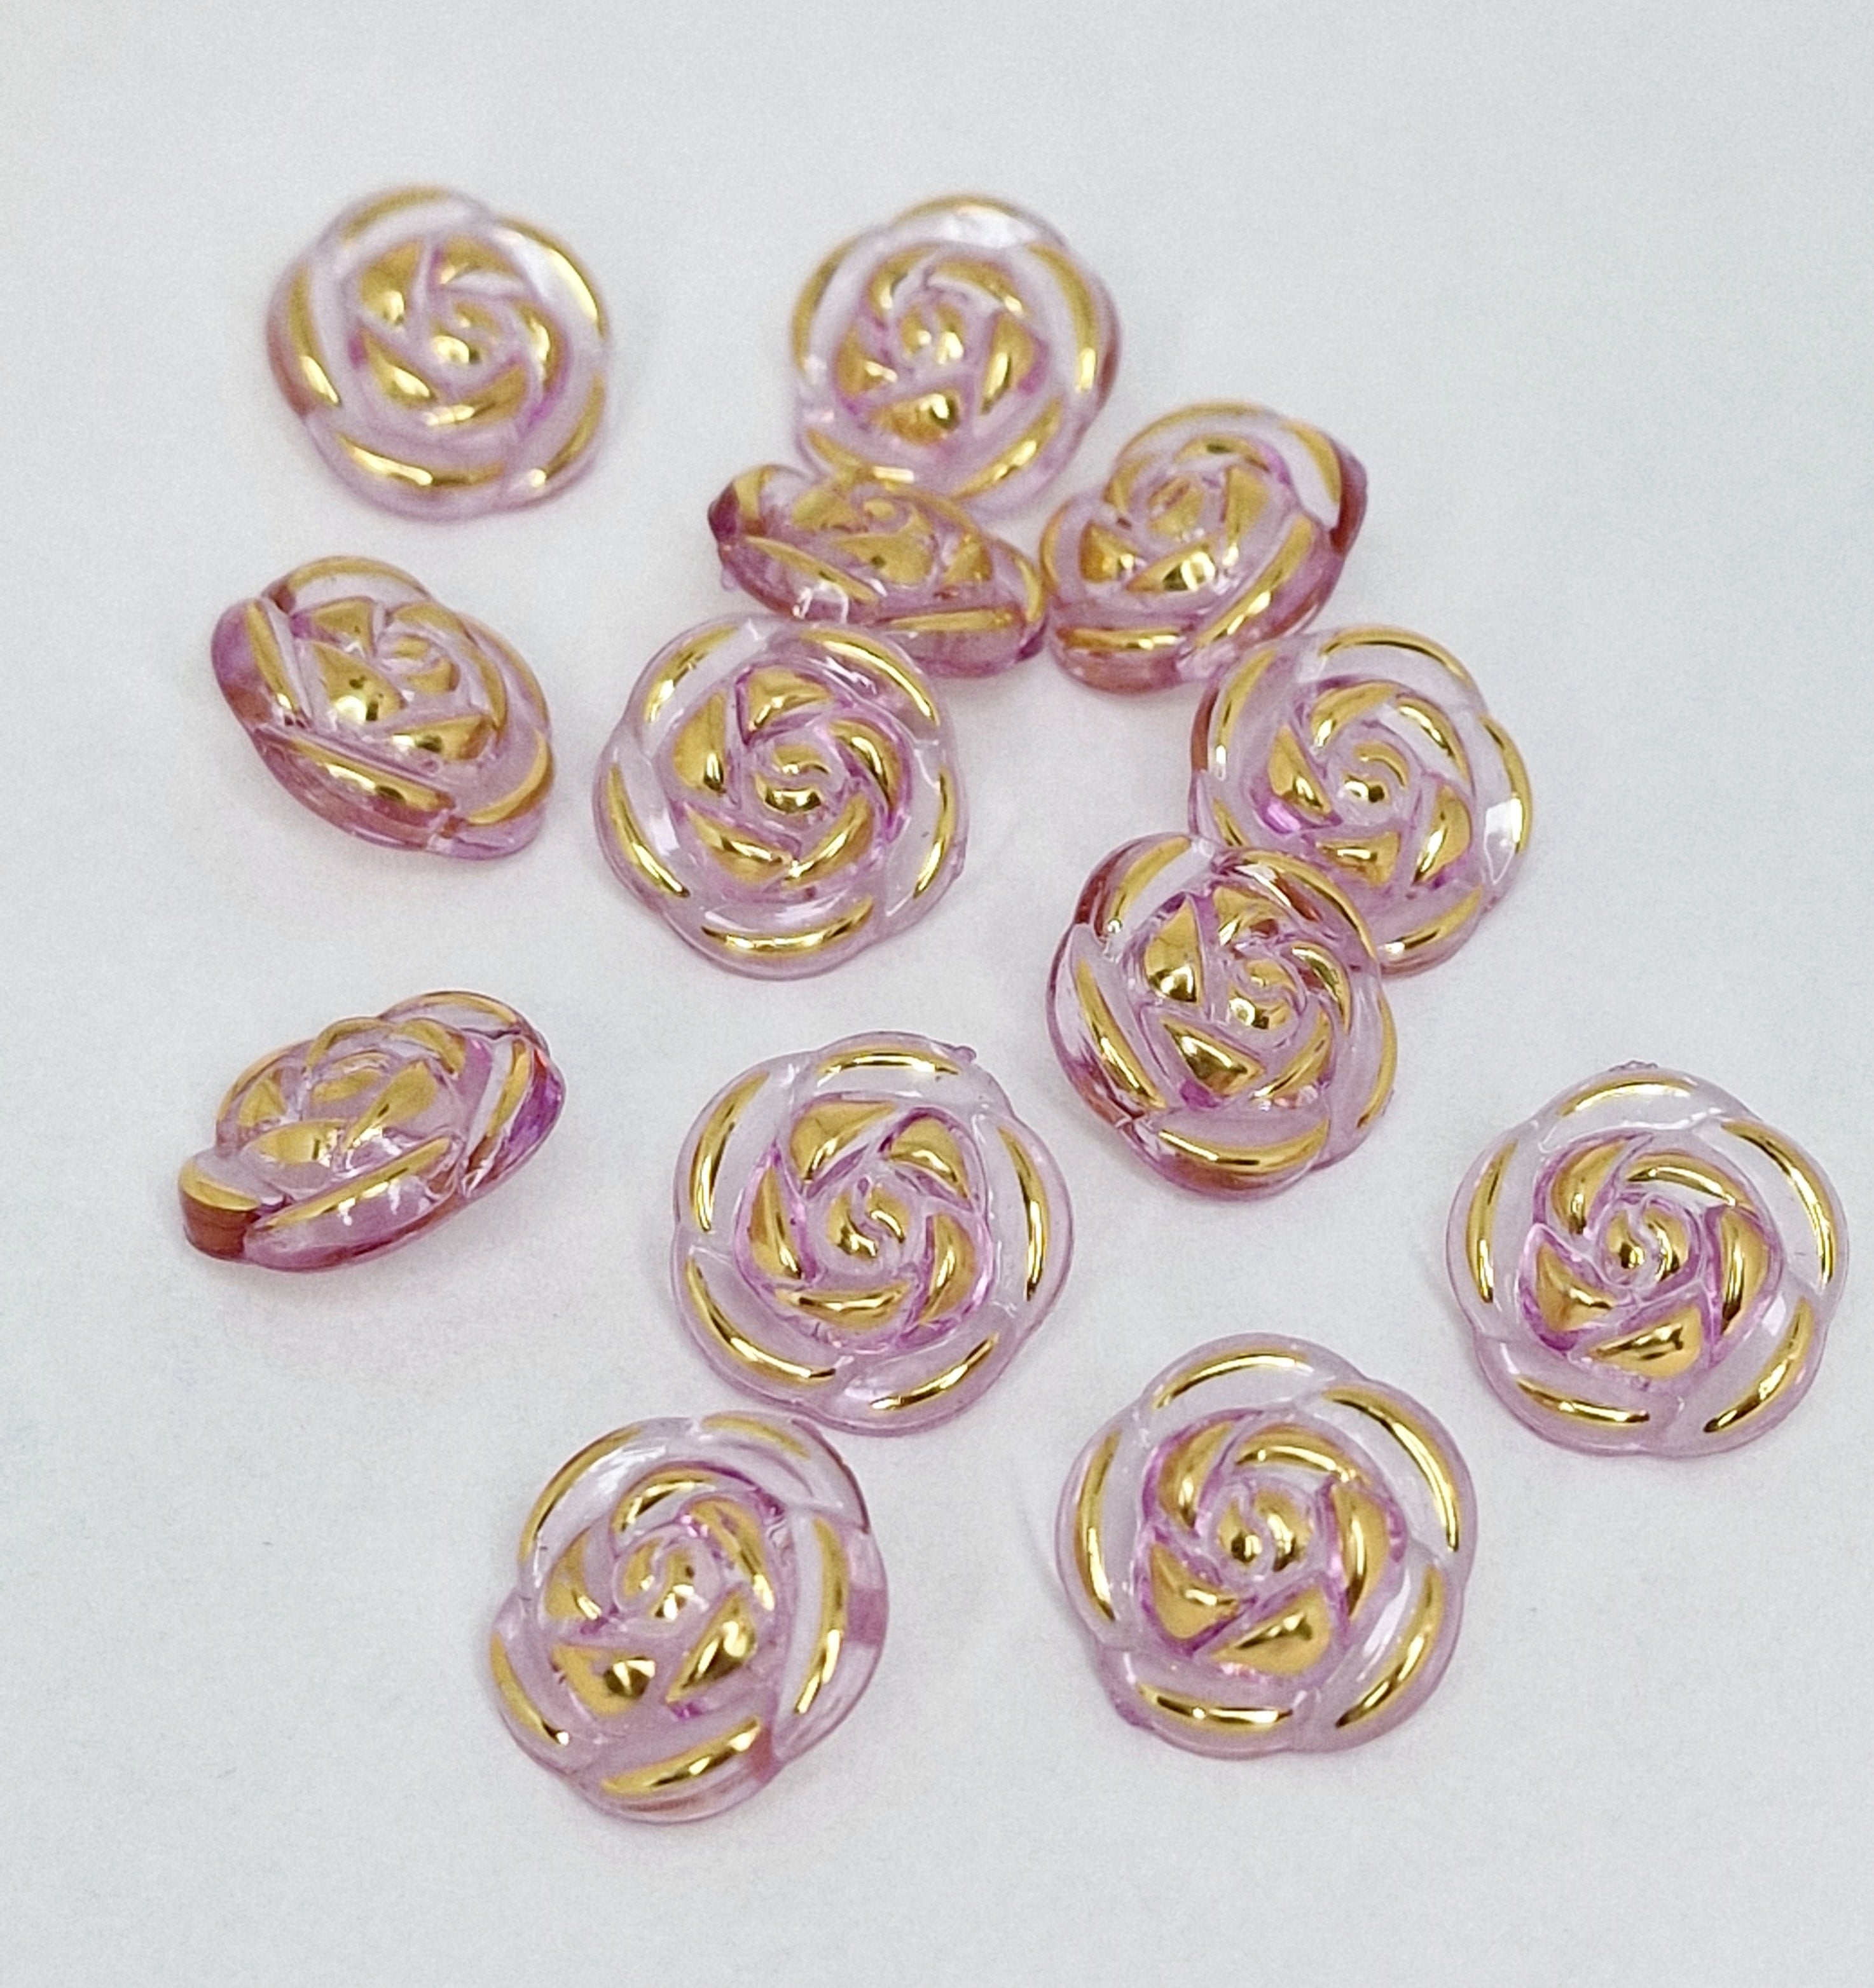 MajorCrafts 40pcs 13mm Light Purple & Gold Rose Flower Shank Resin Buttons